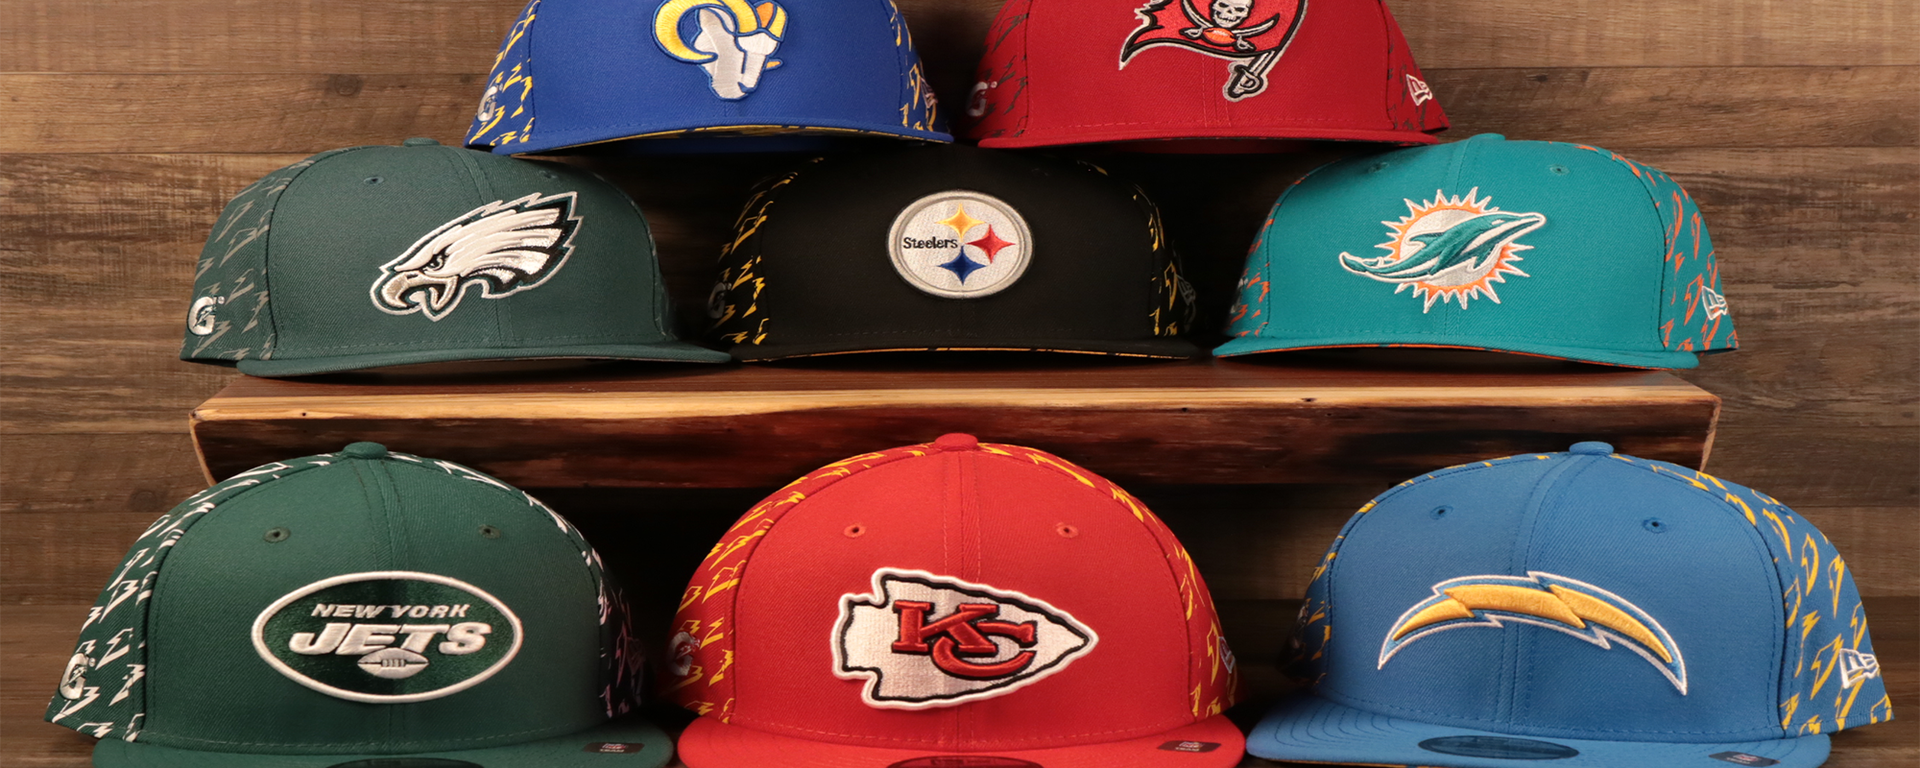 Gatorade x NFL x New Era 9Fifty Snapback Hats | Gatorade Football Hats